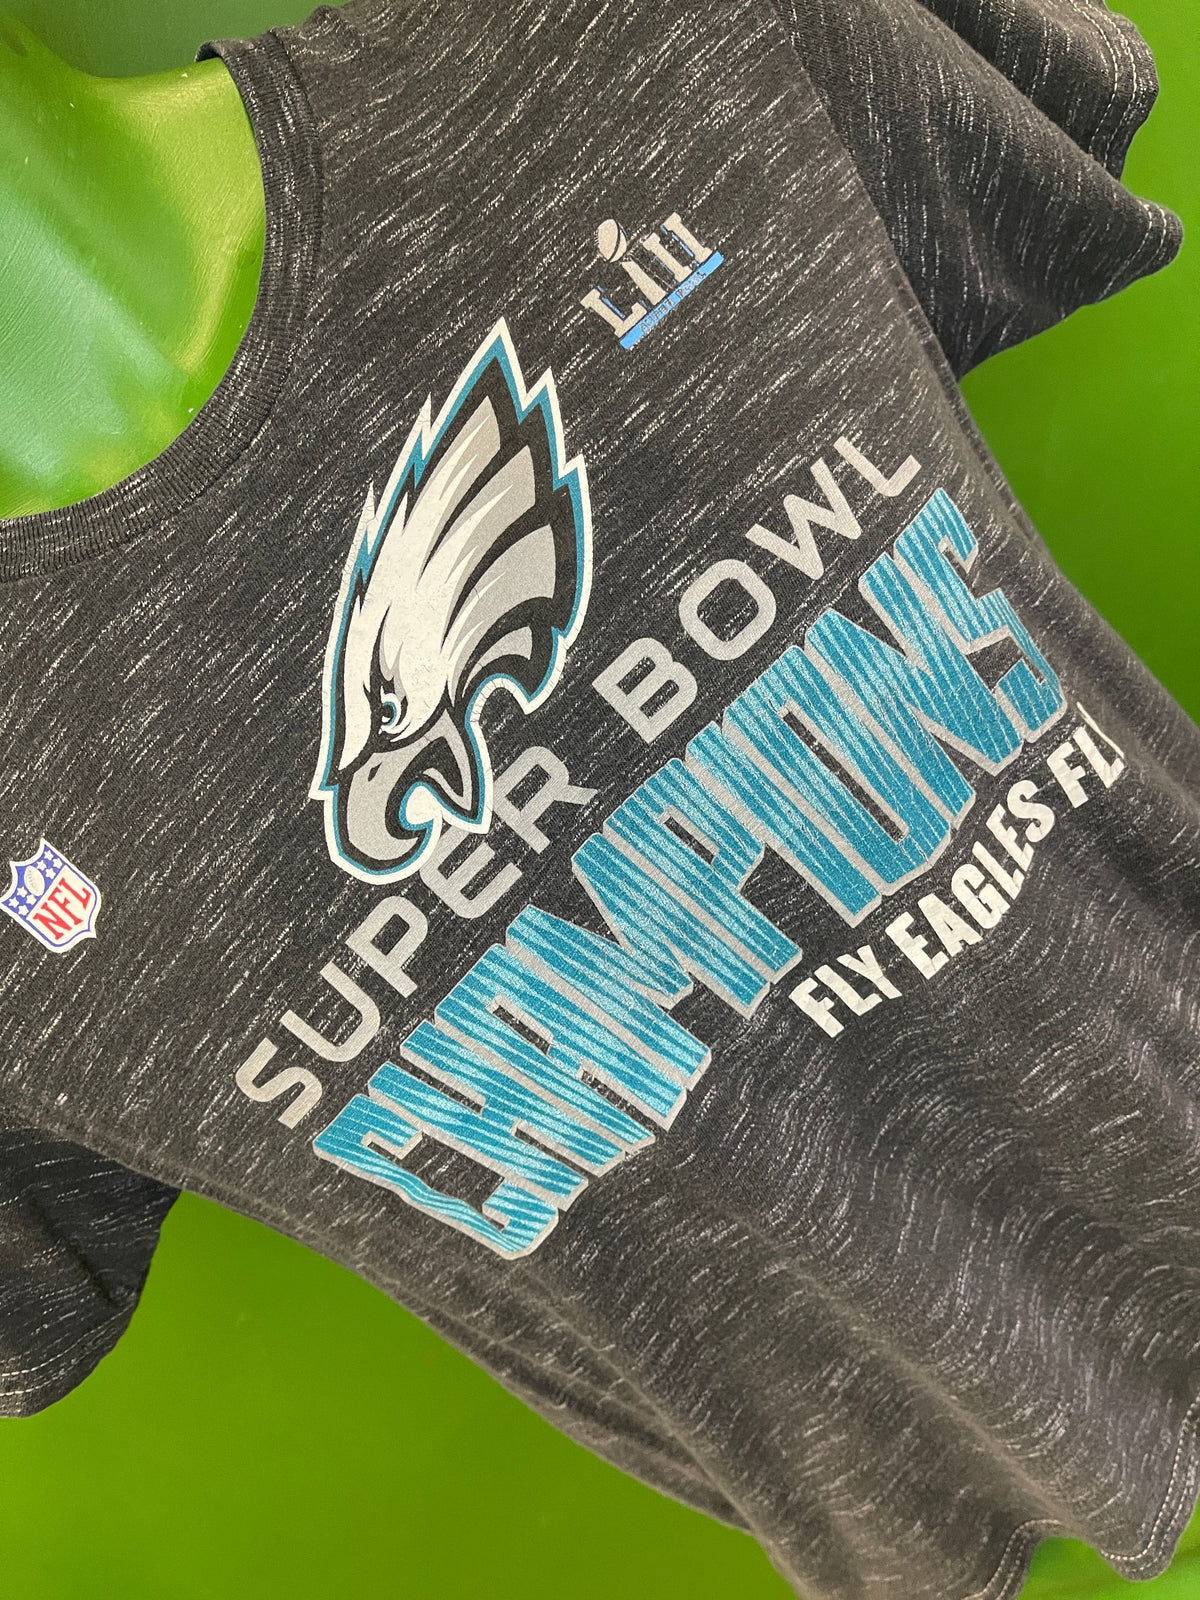 NFL Philadelphia Eagles Fanatics Super Bowl LII Grey T-Shirt Youth Medium 10-12